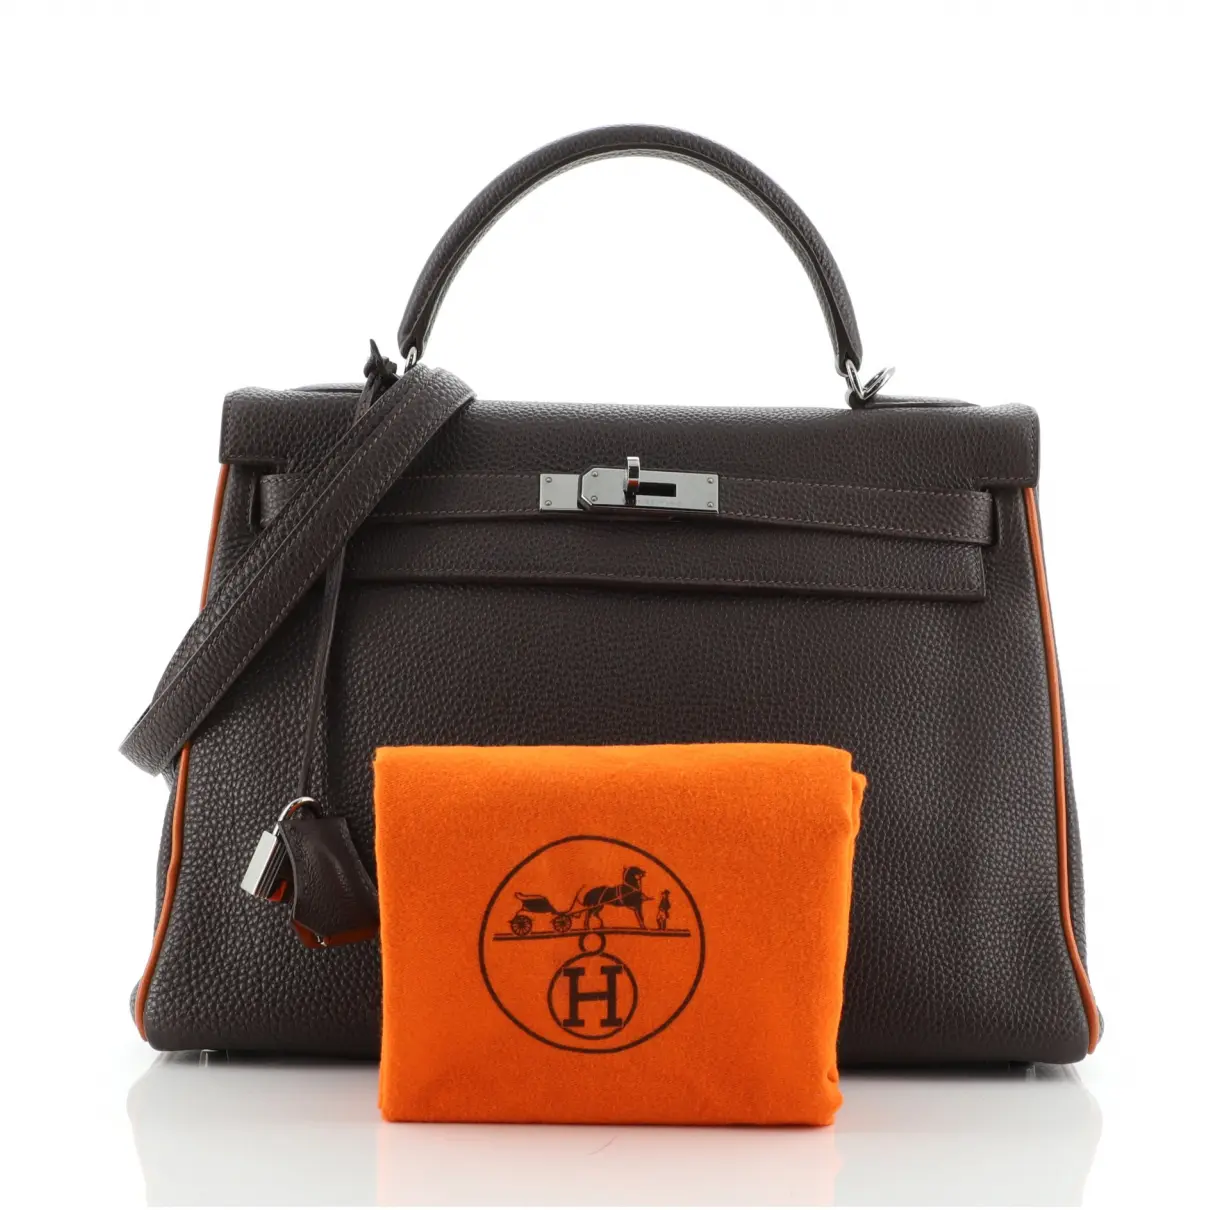 Buy Hermès Leather handbag online